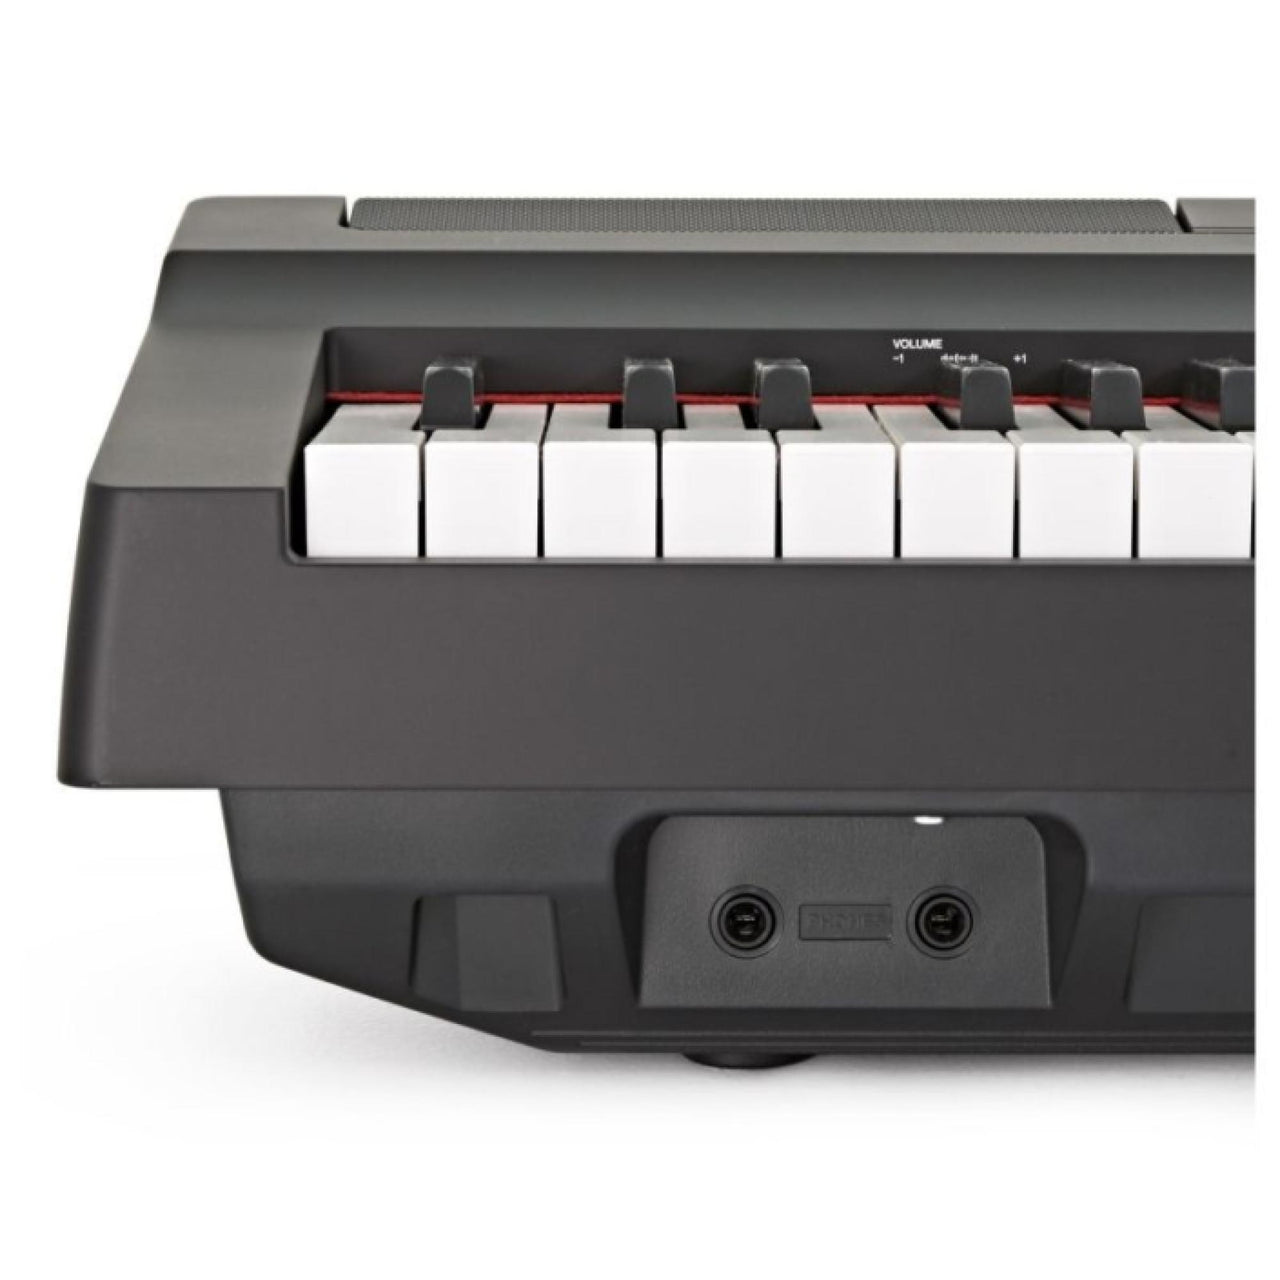 Piano Digital Yamaha Intermedio Negro (inc. Adap. Pa-150), P121b